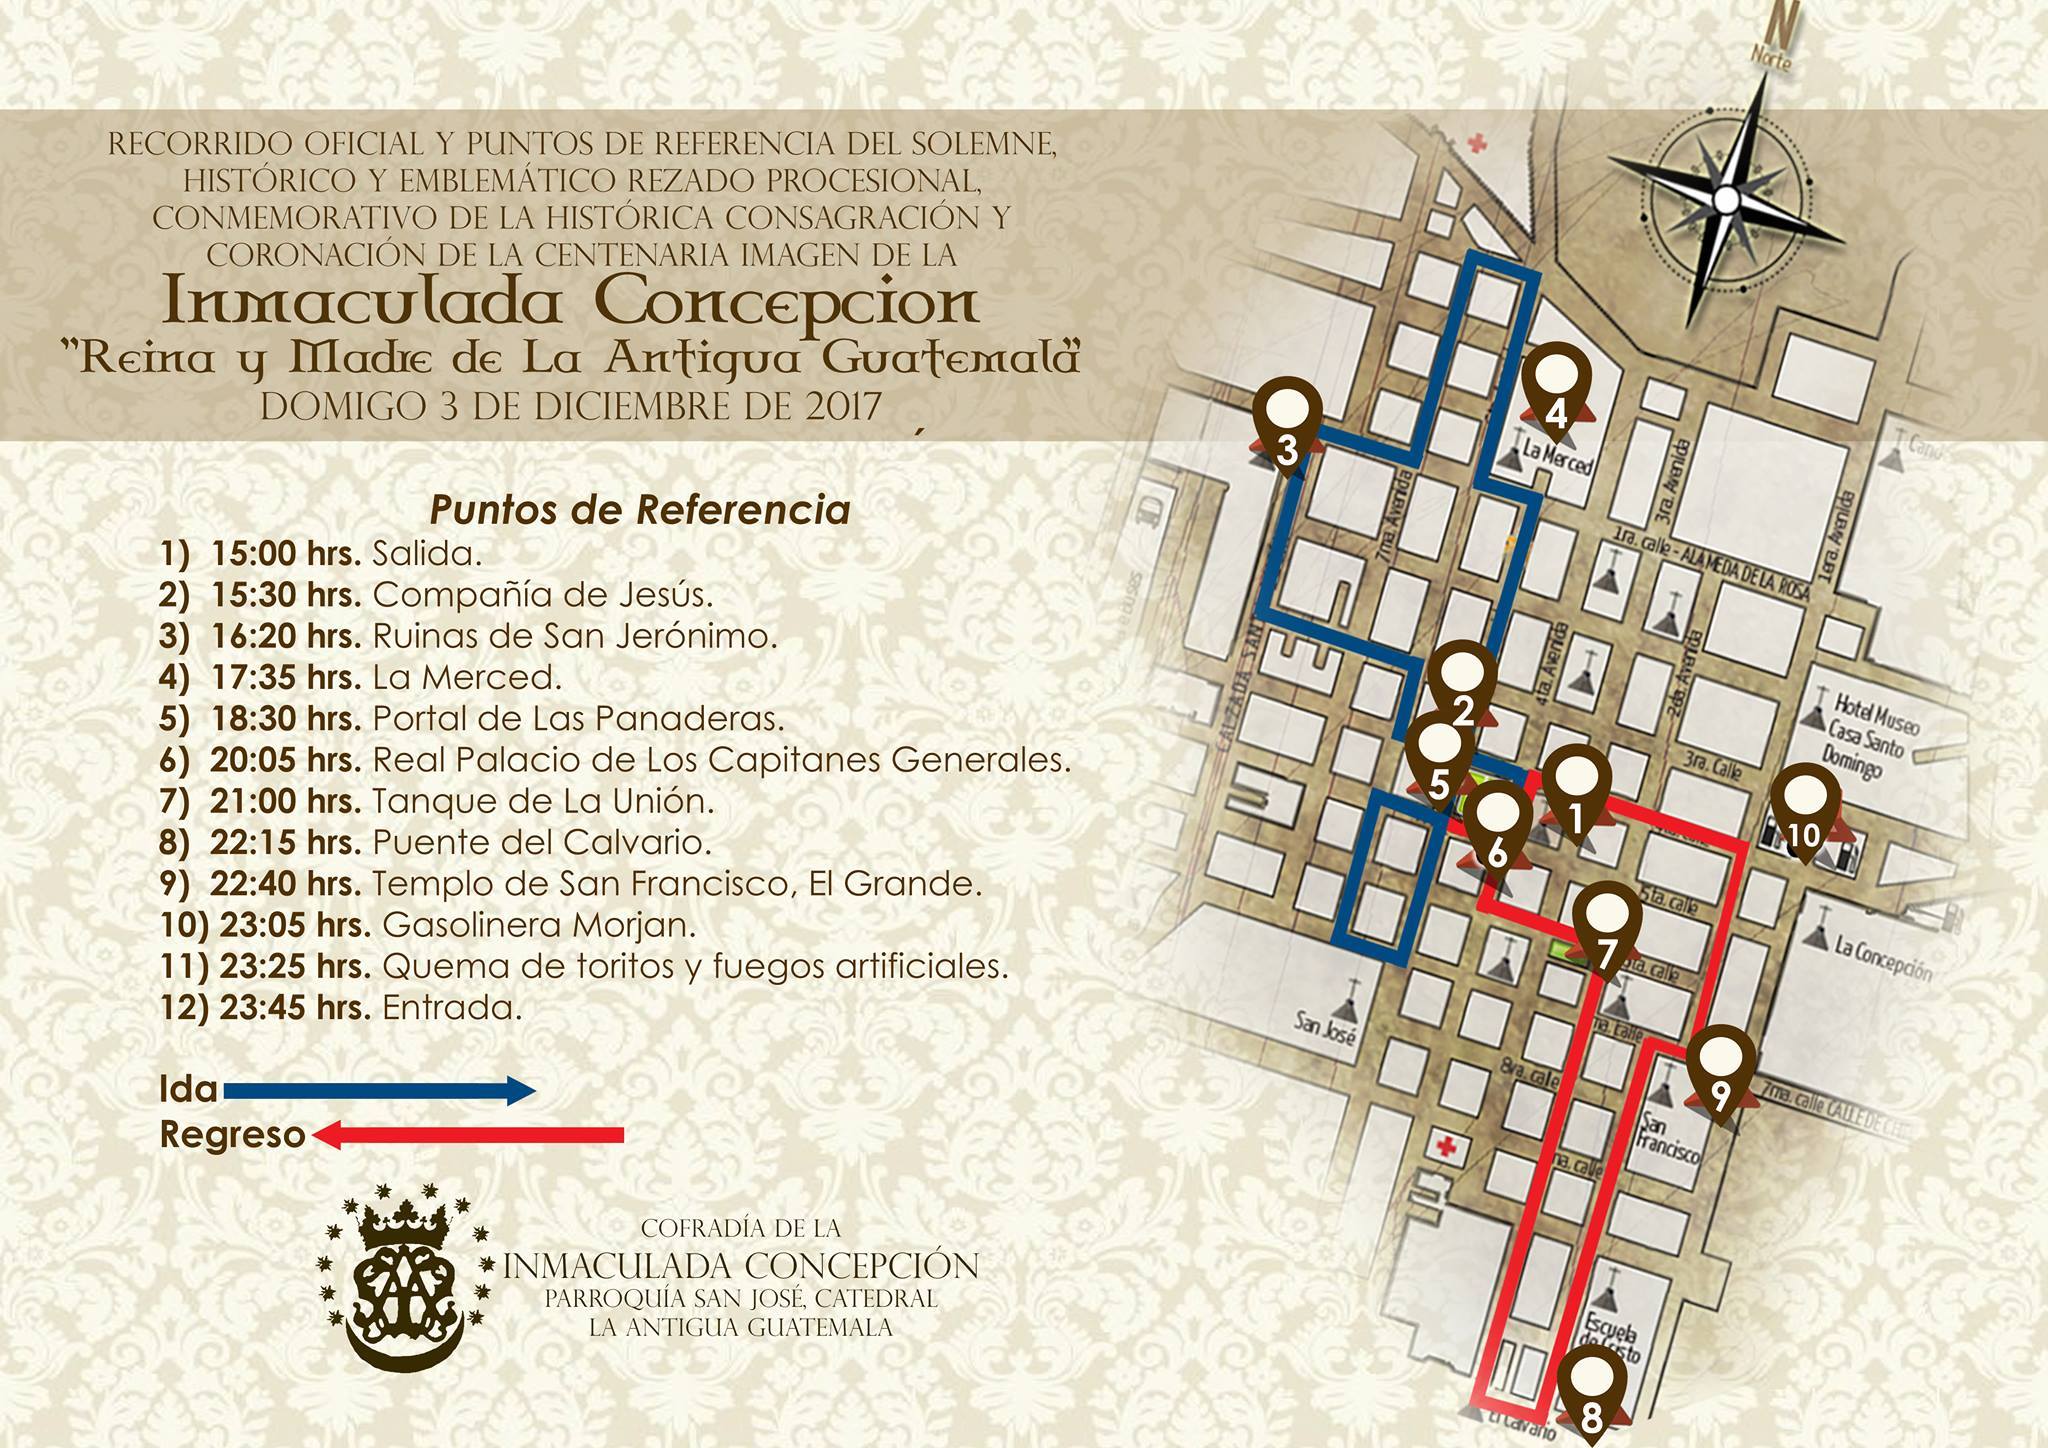 Recorrido Inmaculada Concepcion de Catedral Antigua Guatemala